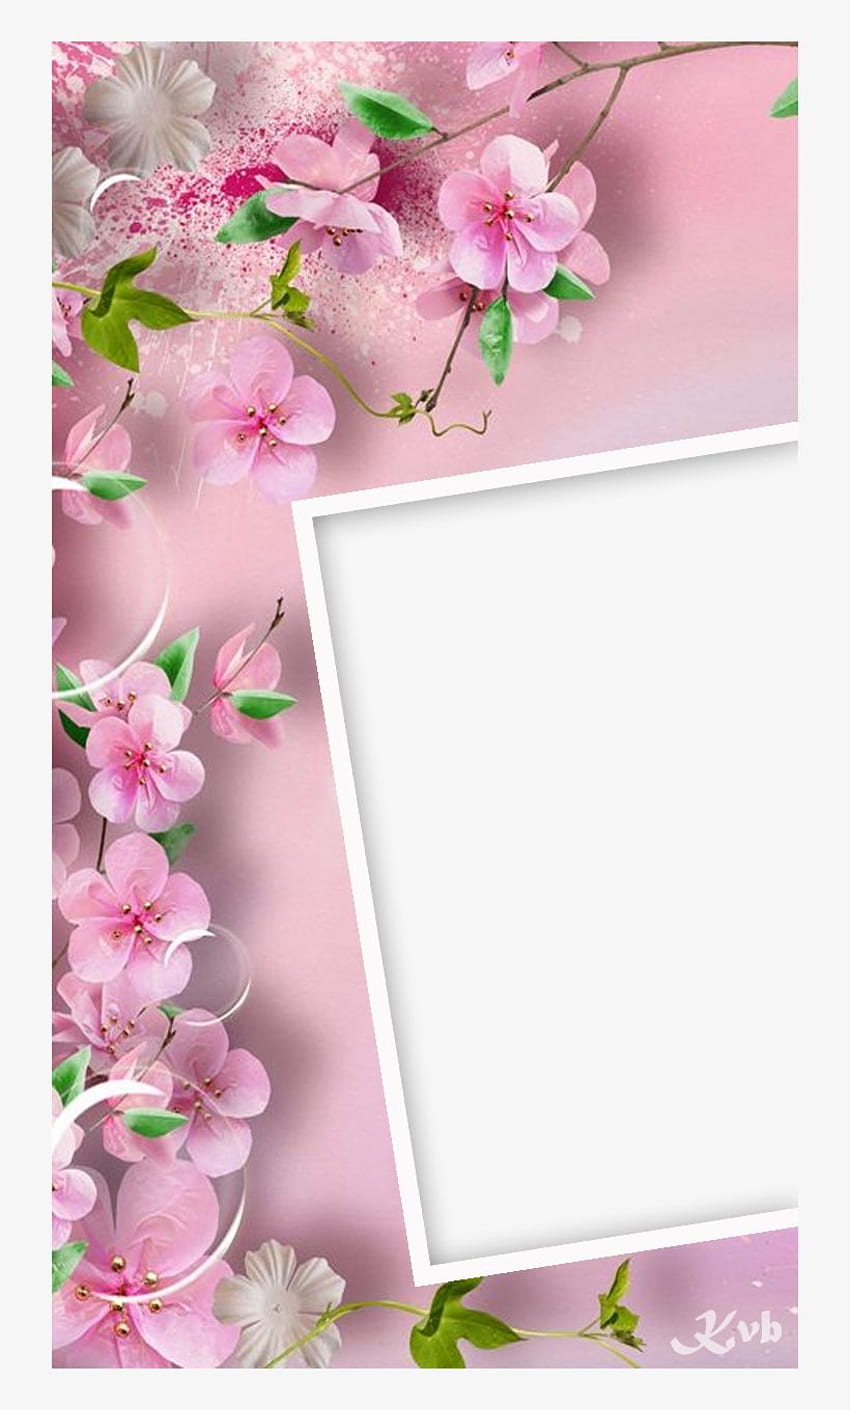 Marco de flor rosa - Flor de Android - PNG transparente fondo de pantalla del teléfono